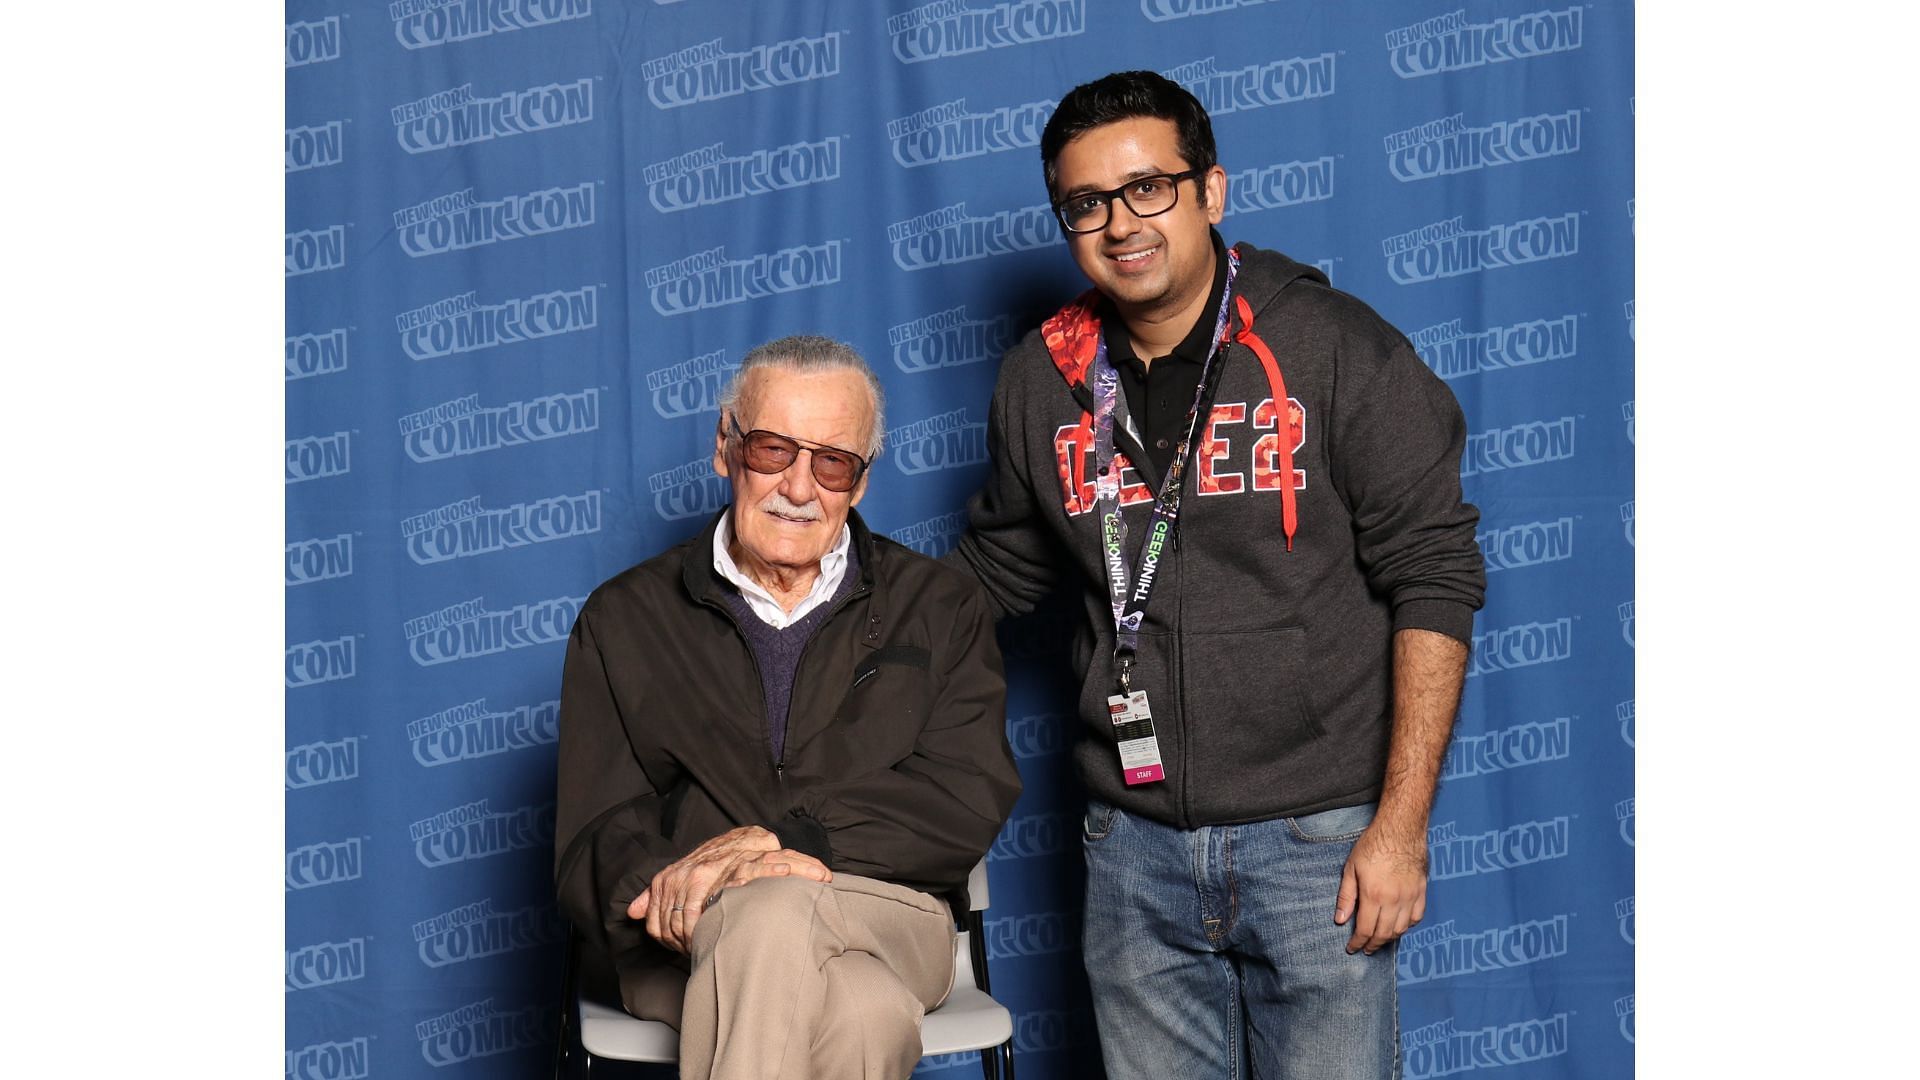 Varma with Stan Lee at the New York Con (image via Jatin Varma)